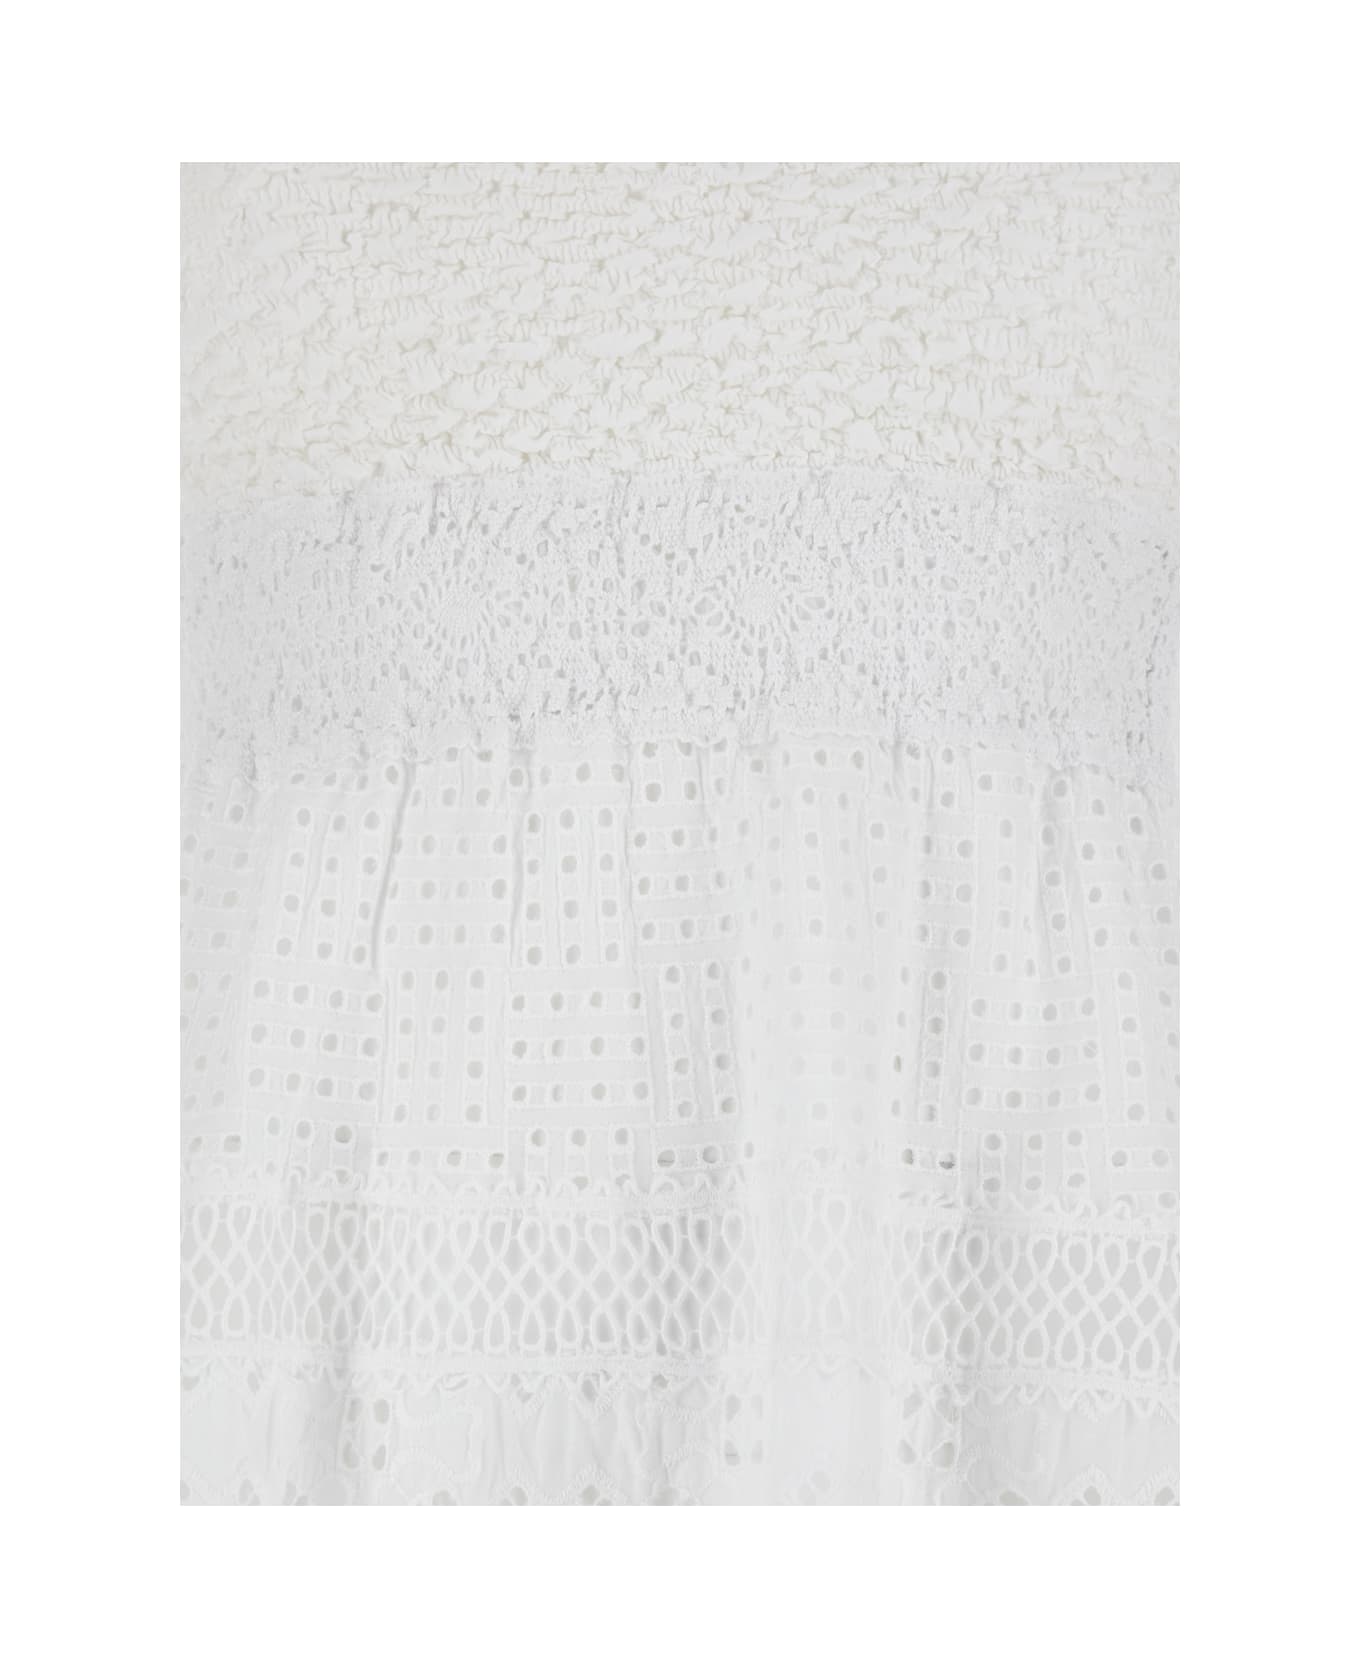 Temptation Positano White Long Embroidered Dress In Cotton Woman - White